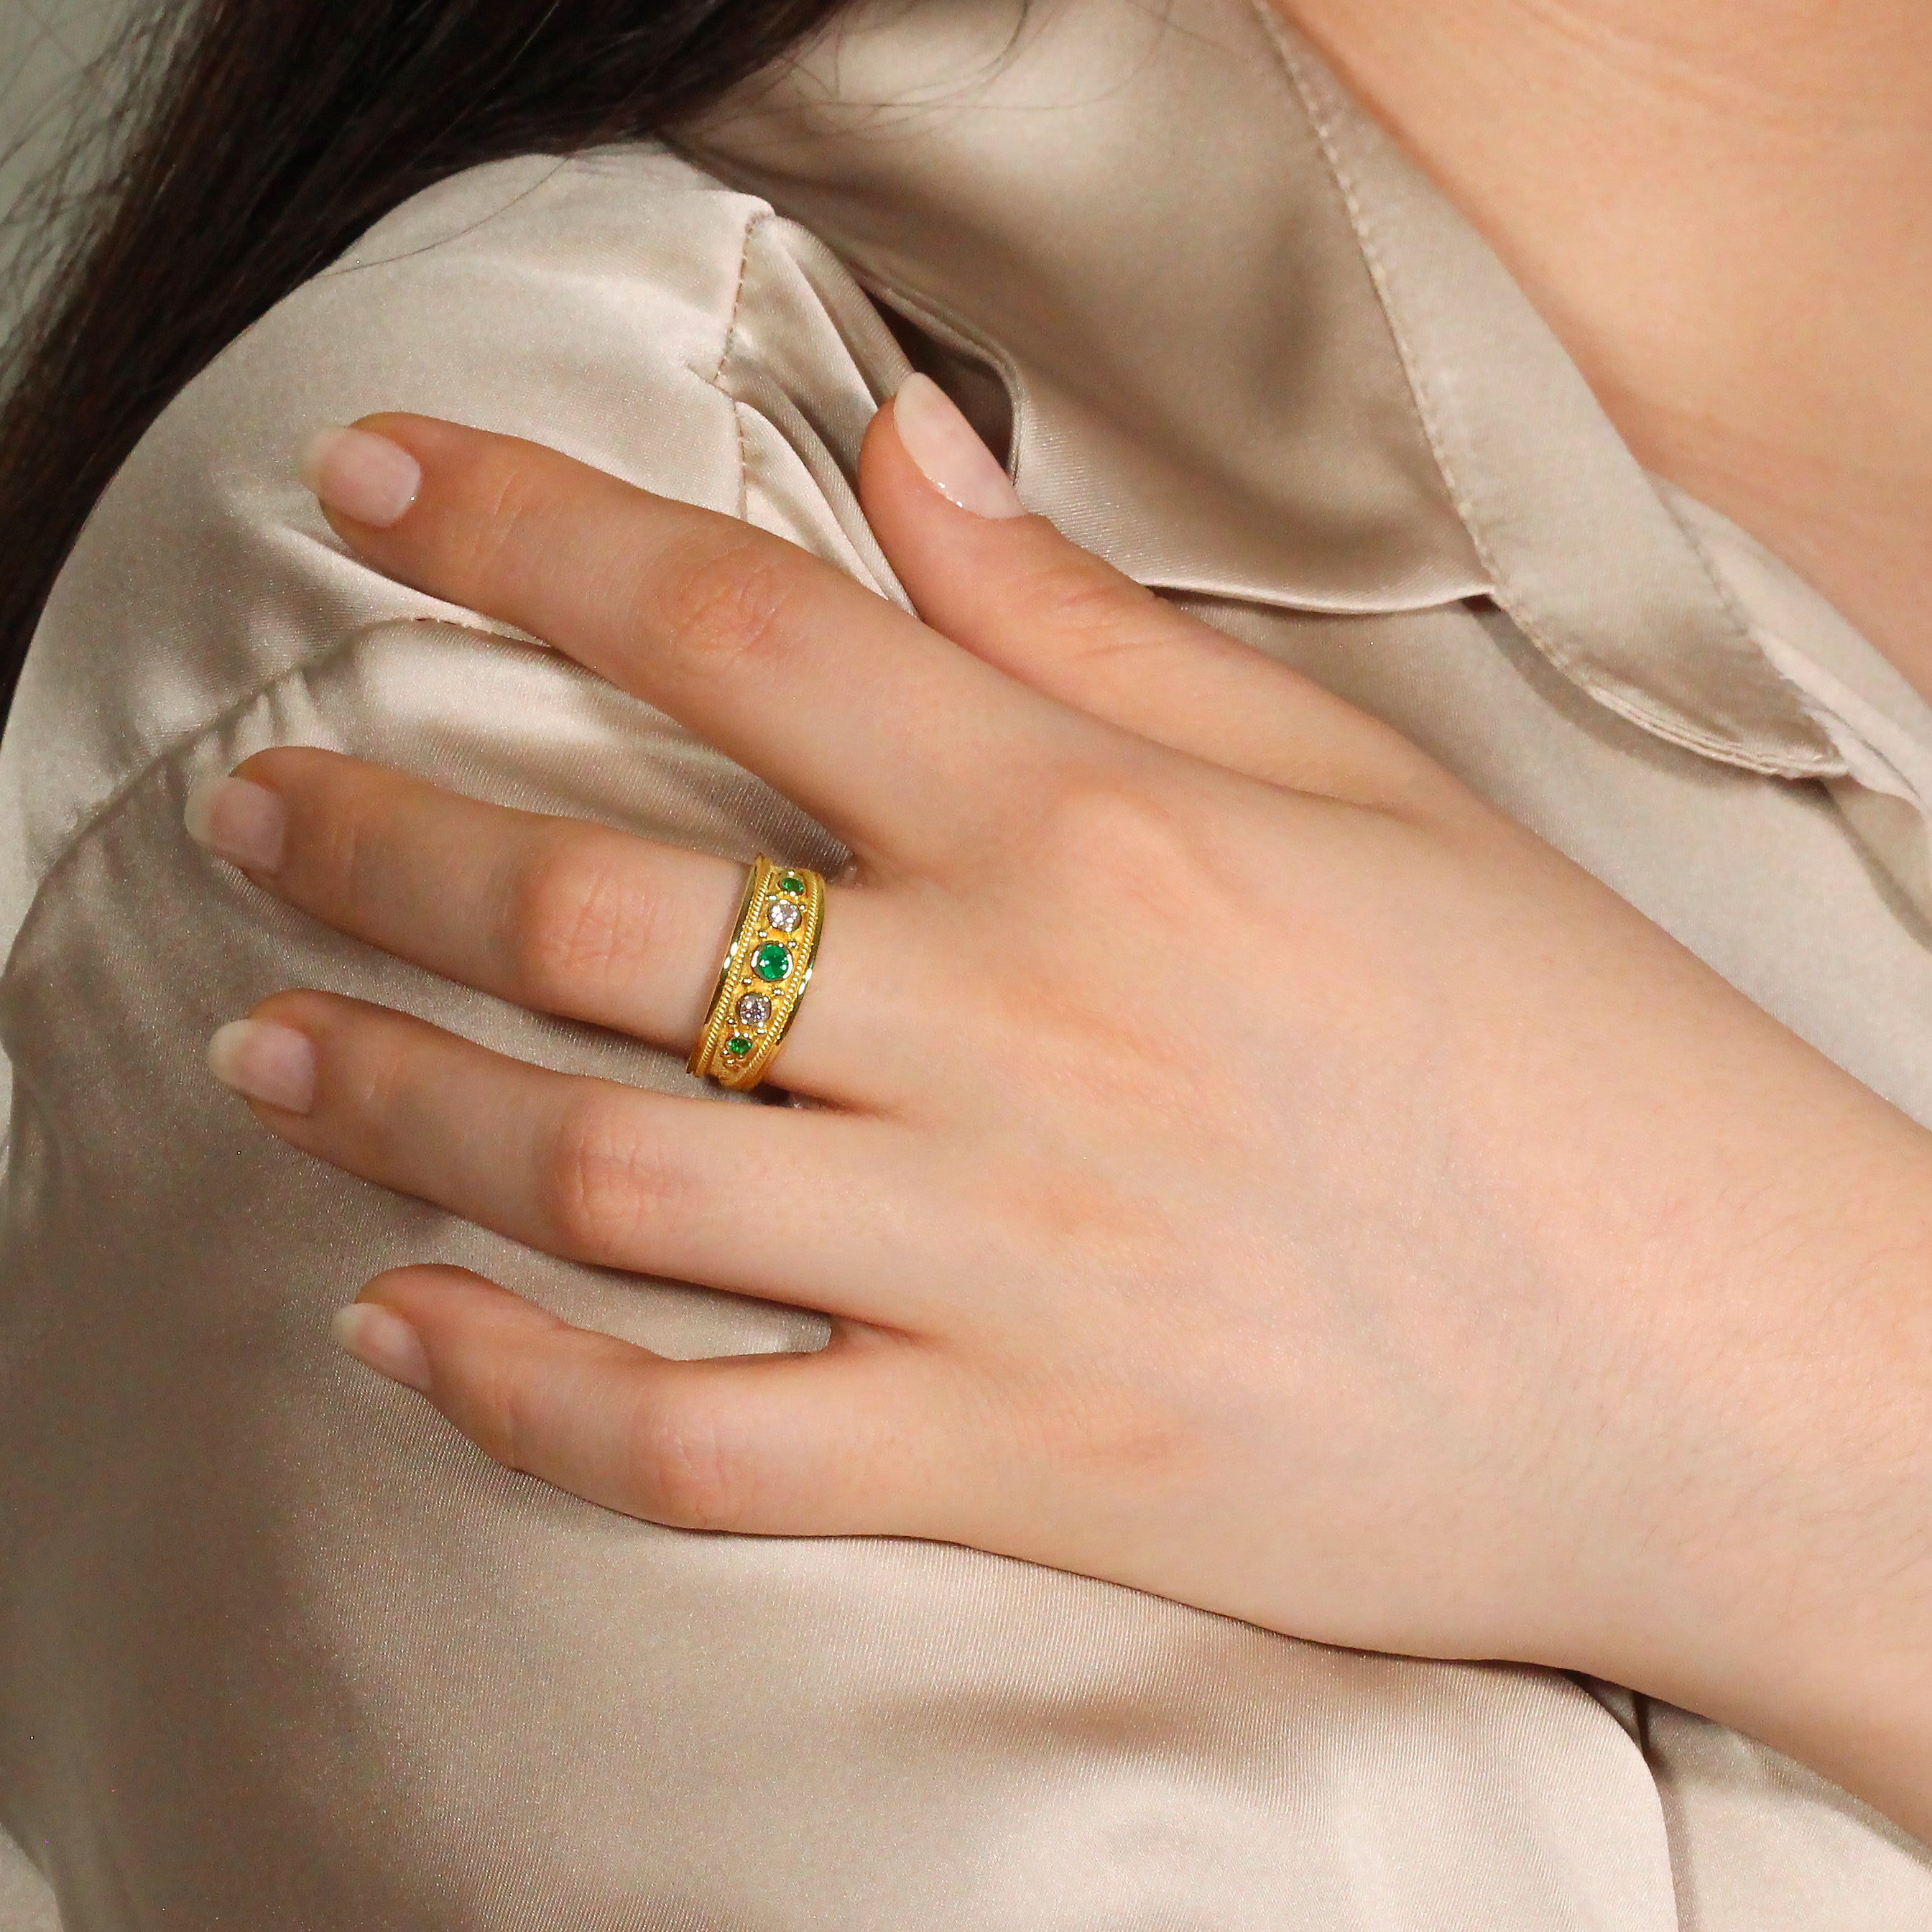 Emerald Diamond Gold Ring Odysseus Jewelry